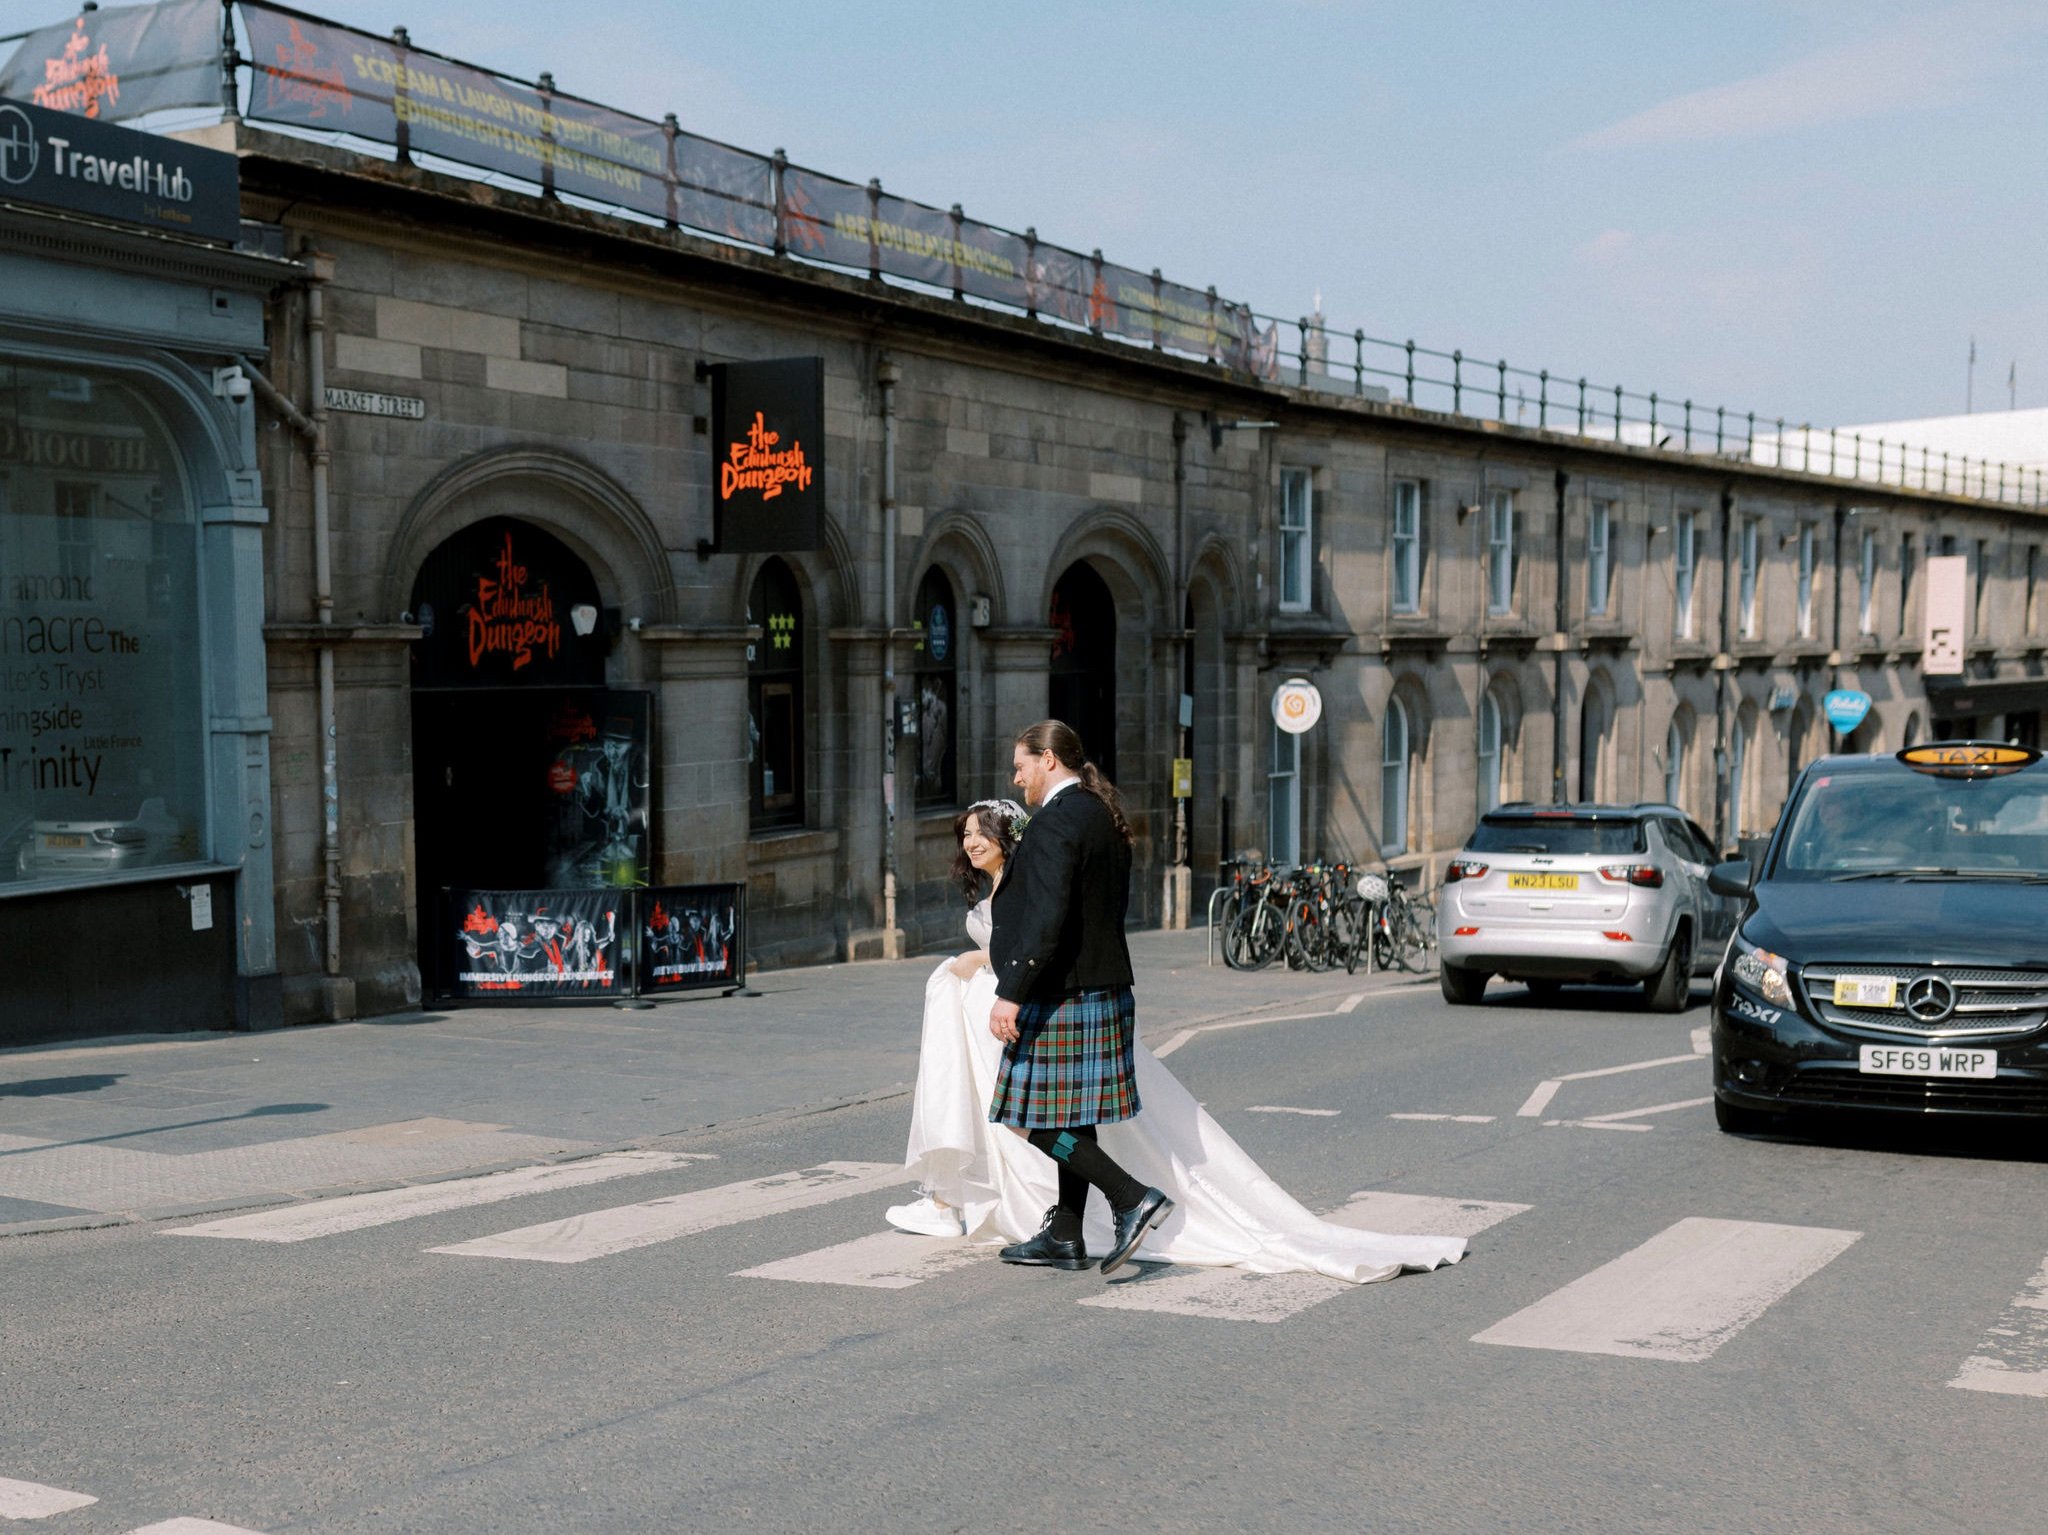 37_edinburgh-wedding-photographer-bride-groom-waking-across-zebra-crossing.jpg